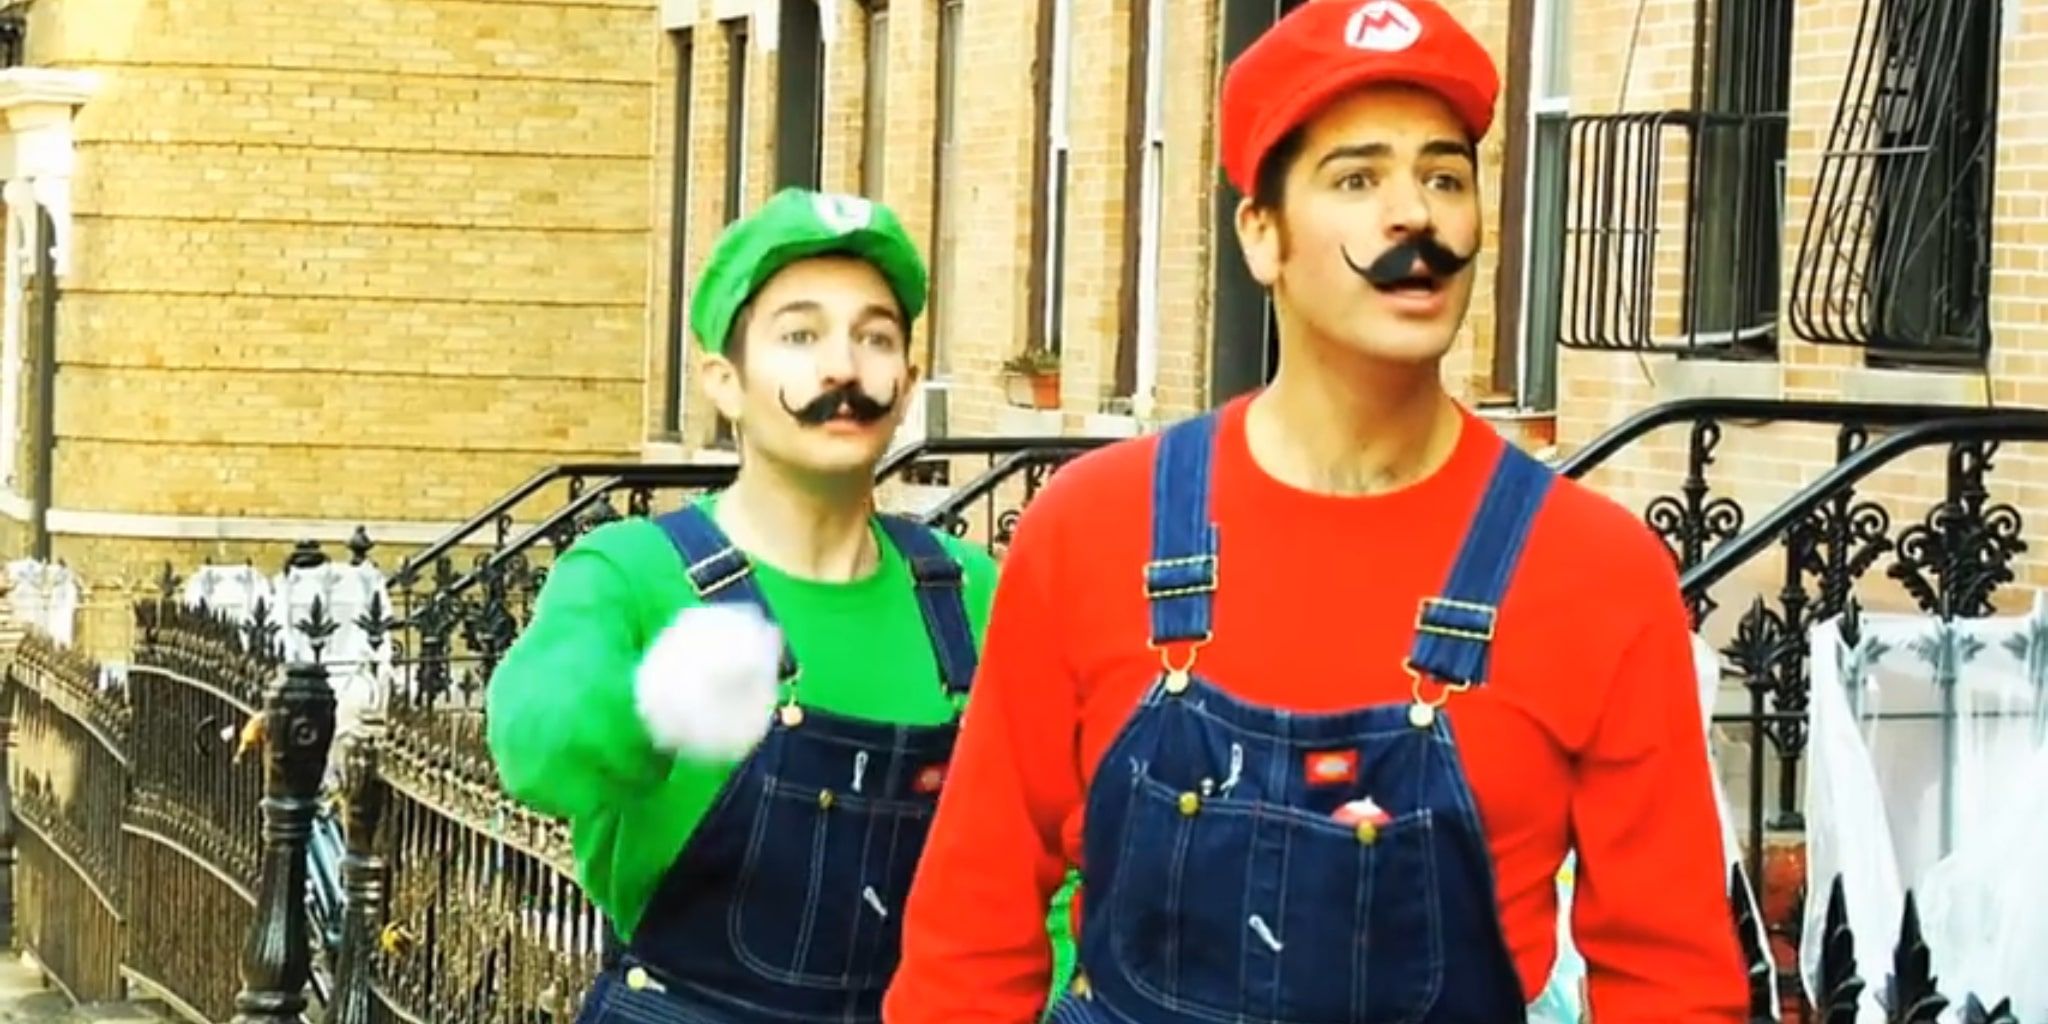 Mario and Luigi stare in horror as Bowser kidnaps Princess Peach.